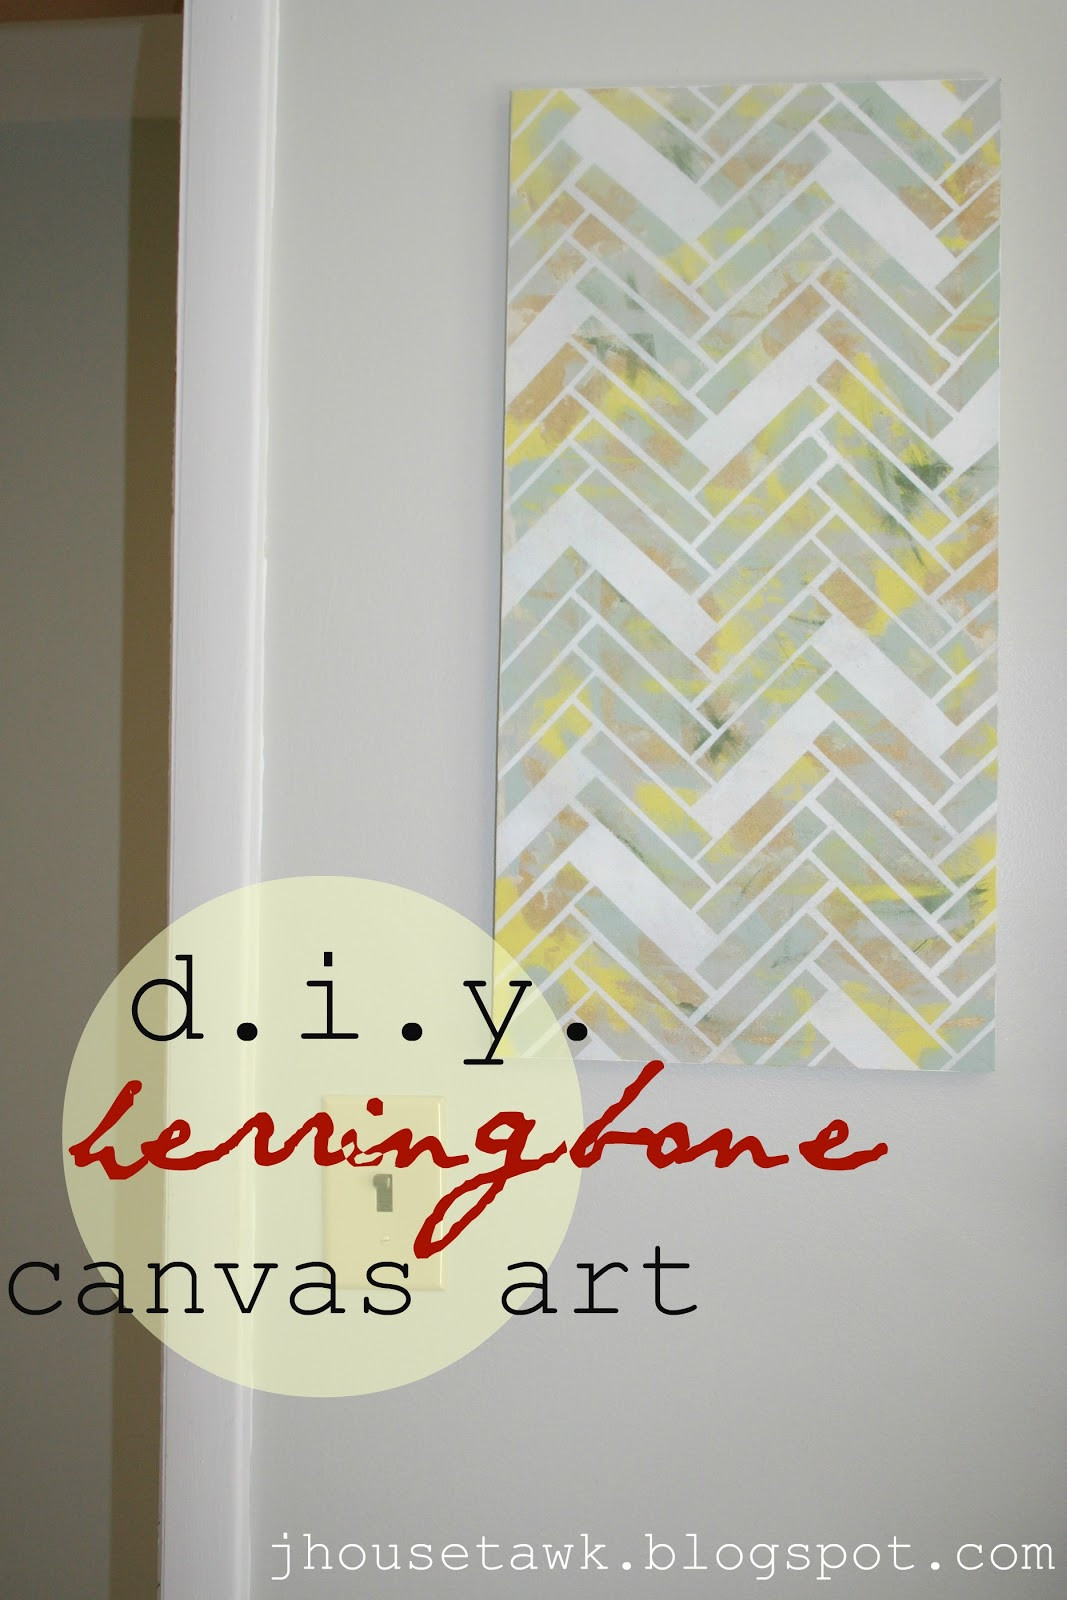 Best ideas about DIY Canvas Art
. Save or Pin J House Tawk DIY Herringbone Canvas Art Now.